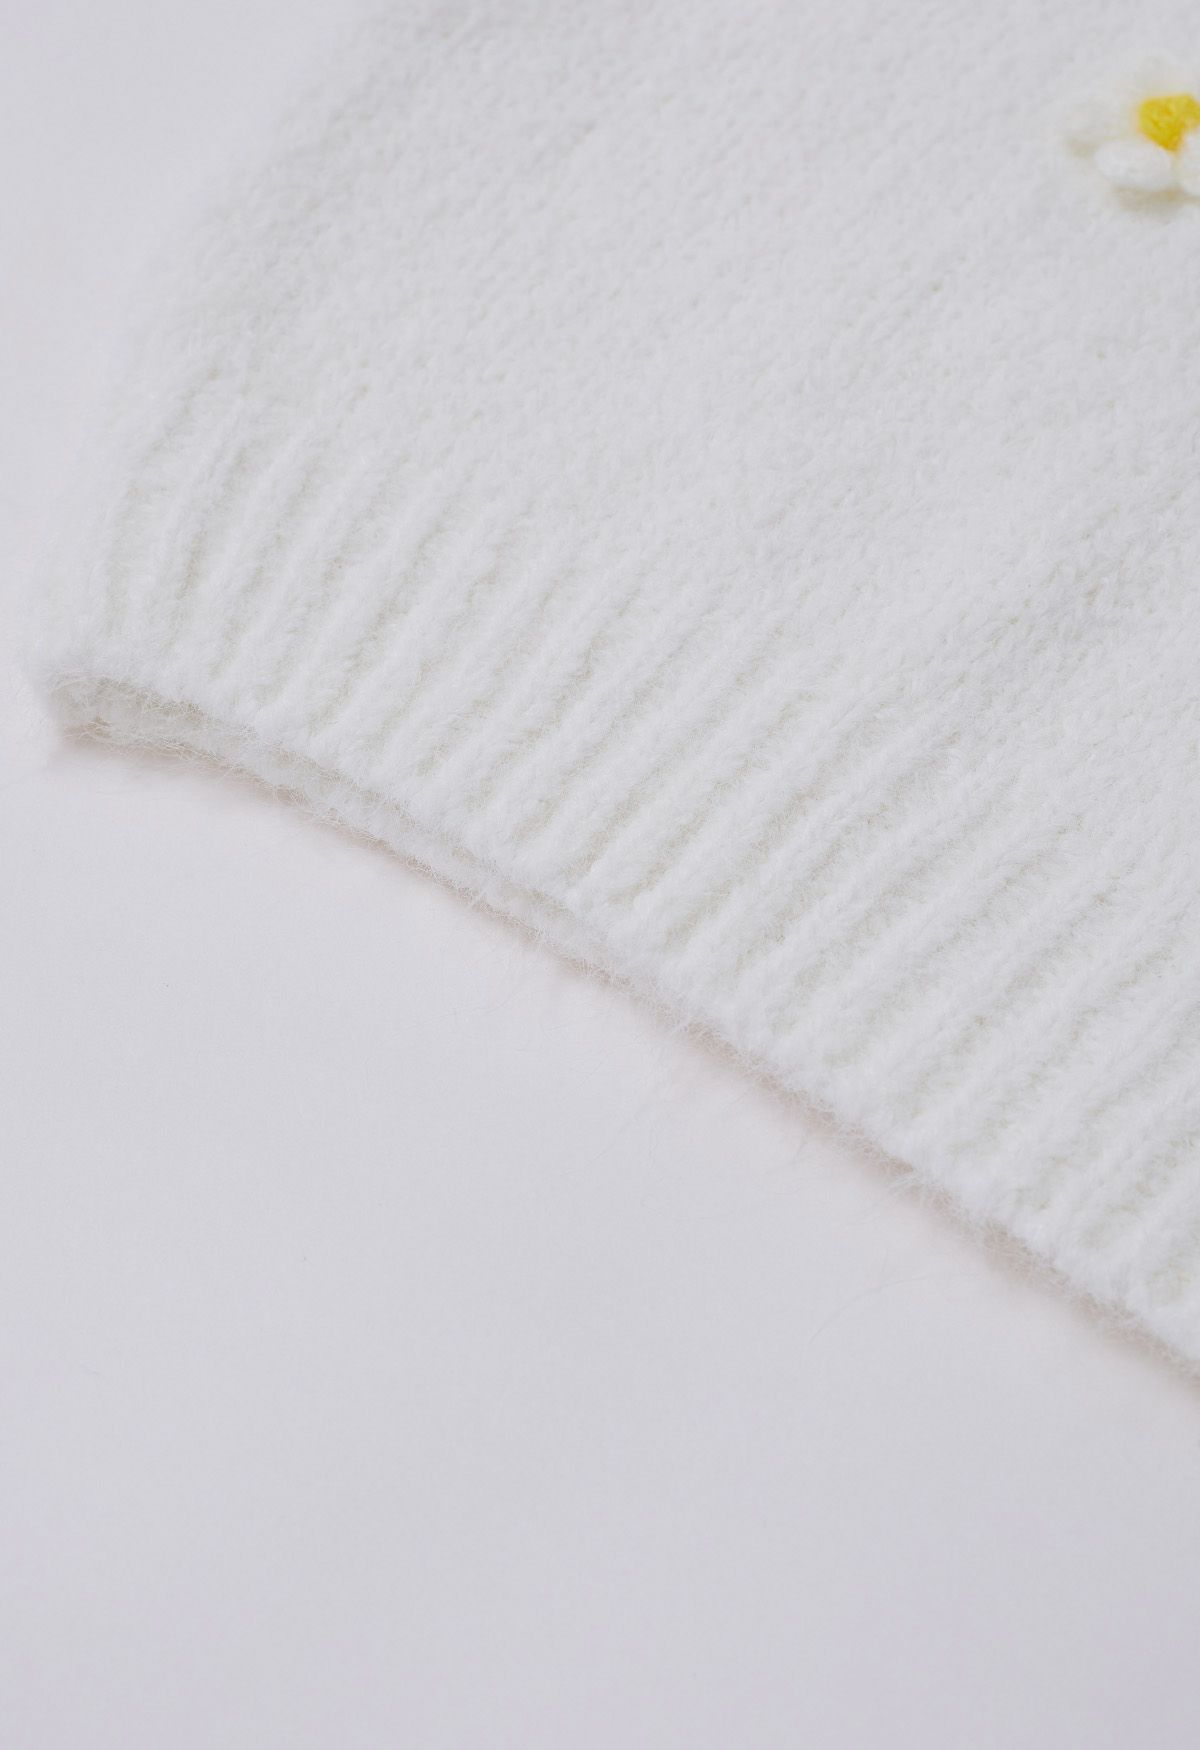 Crochet Flower Bubble Short-Sleeve Sweater in White